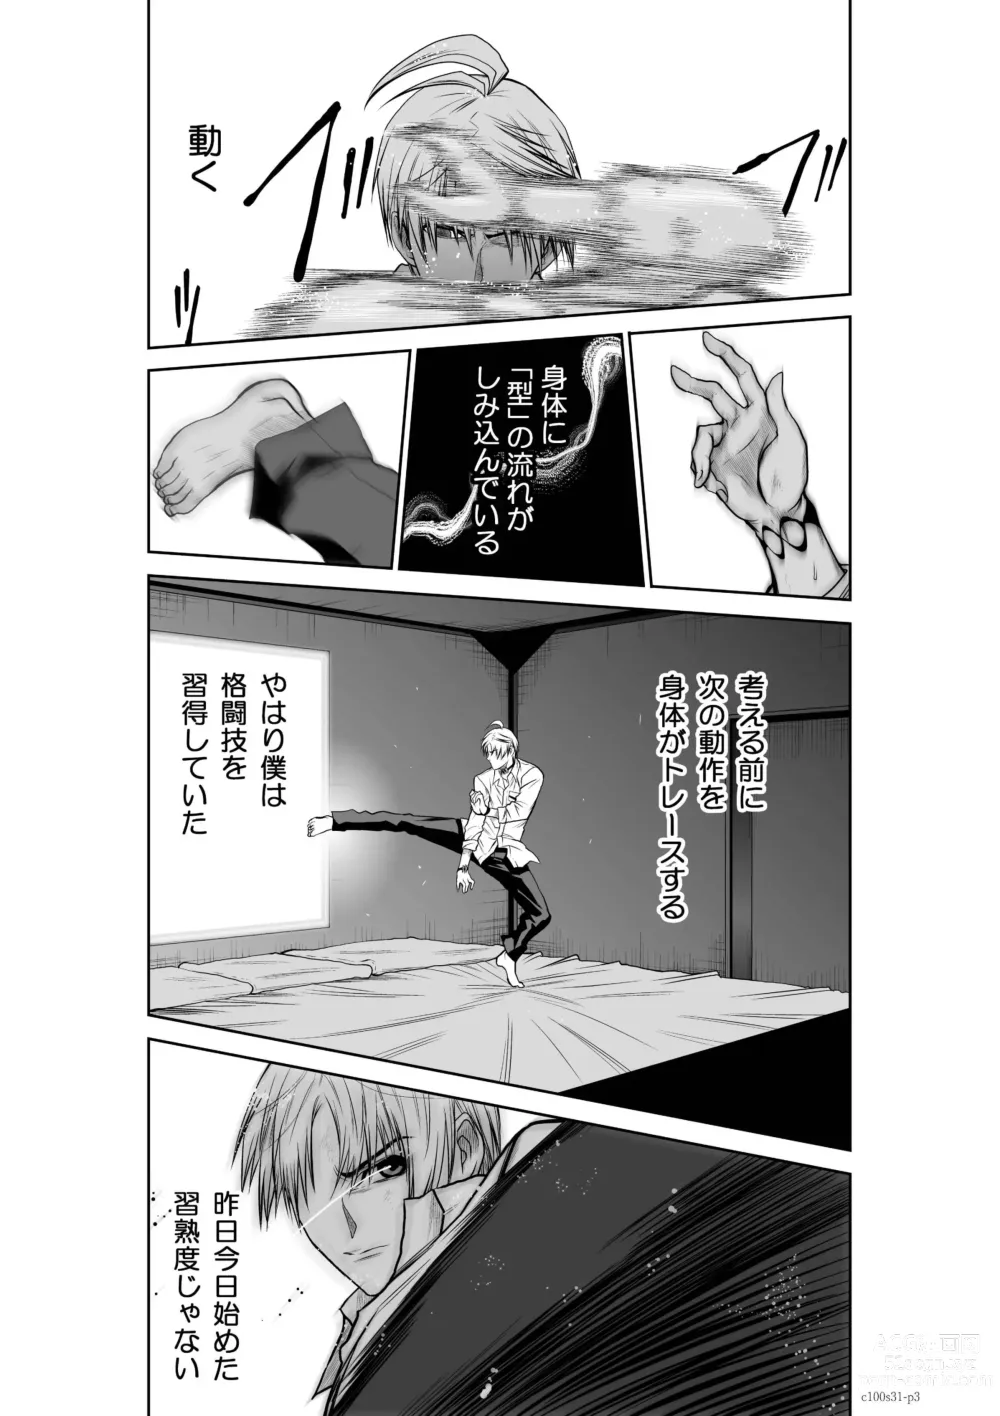 Page 3 of manga Chijou Hyakkai Ch31-60